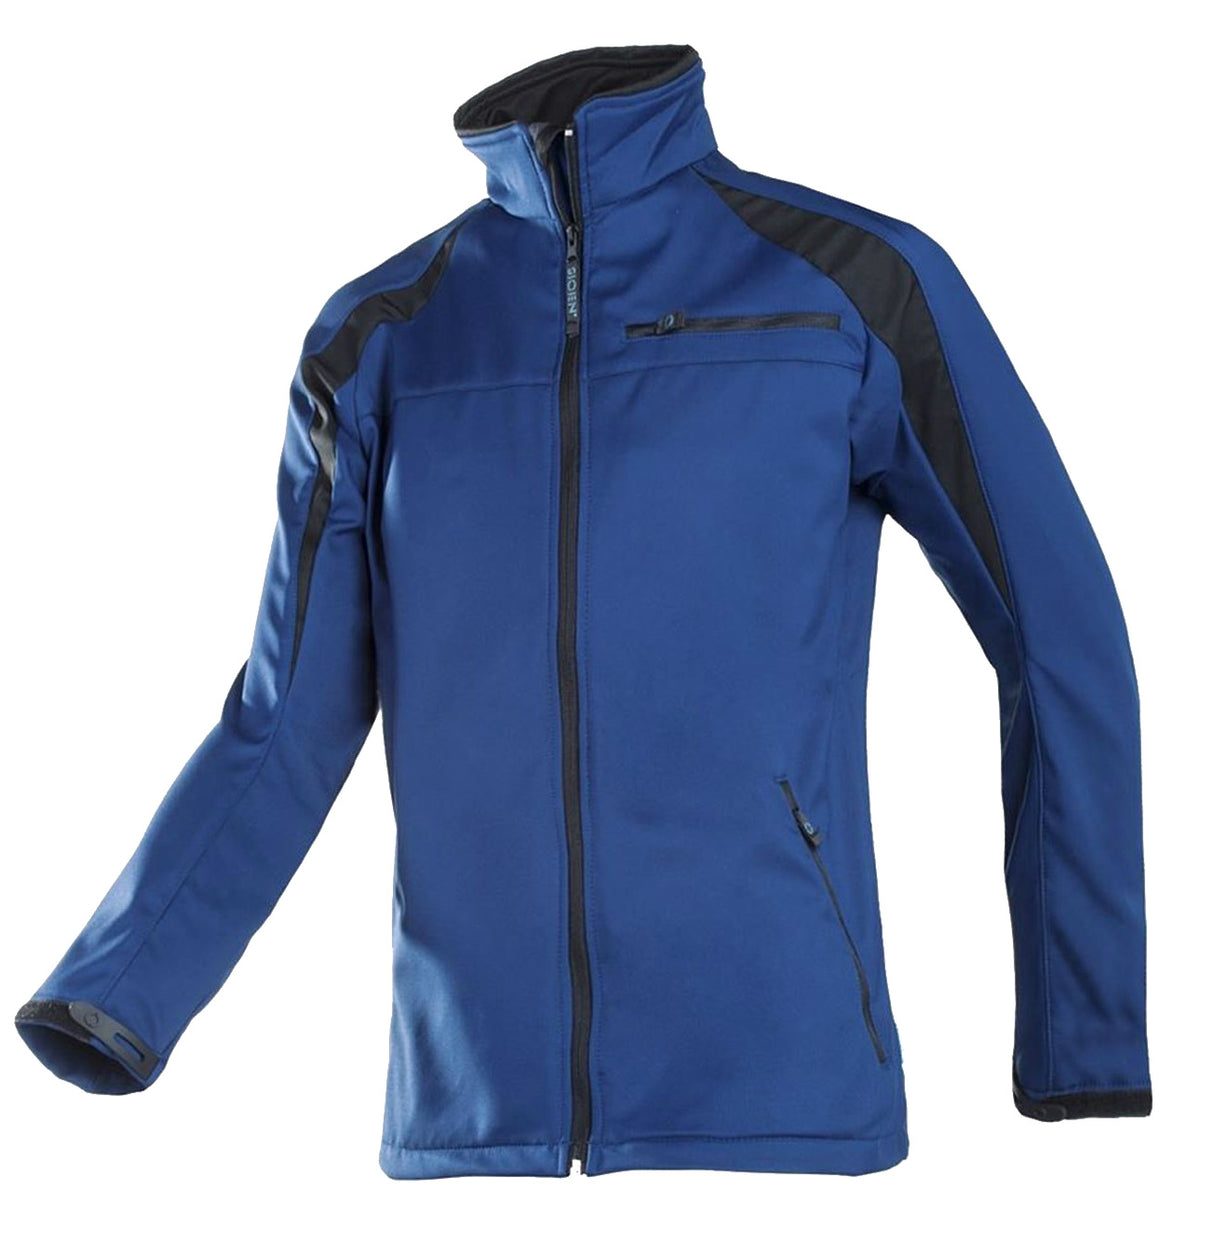 Sioen 9834 Piemonte Softshell Jacket Work Fleece 2 Layers Bond